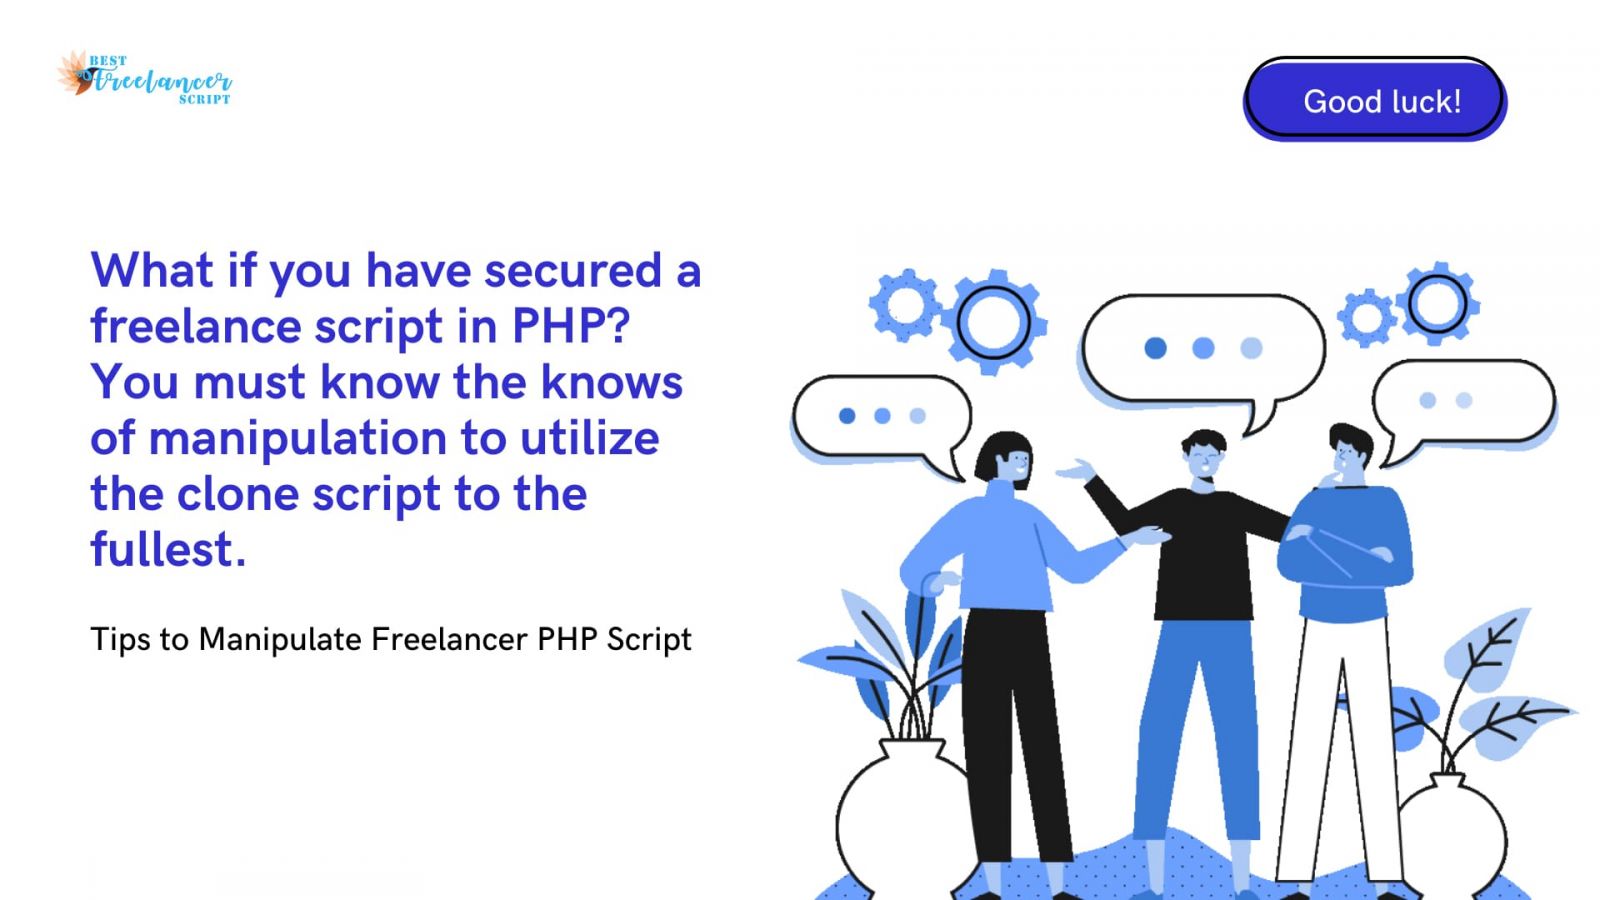 Freelance script in PHP